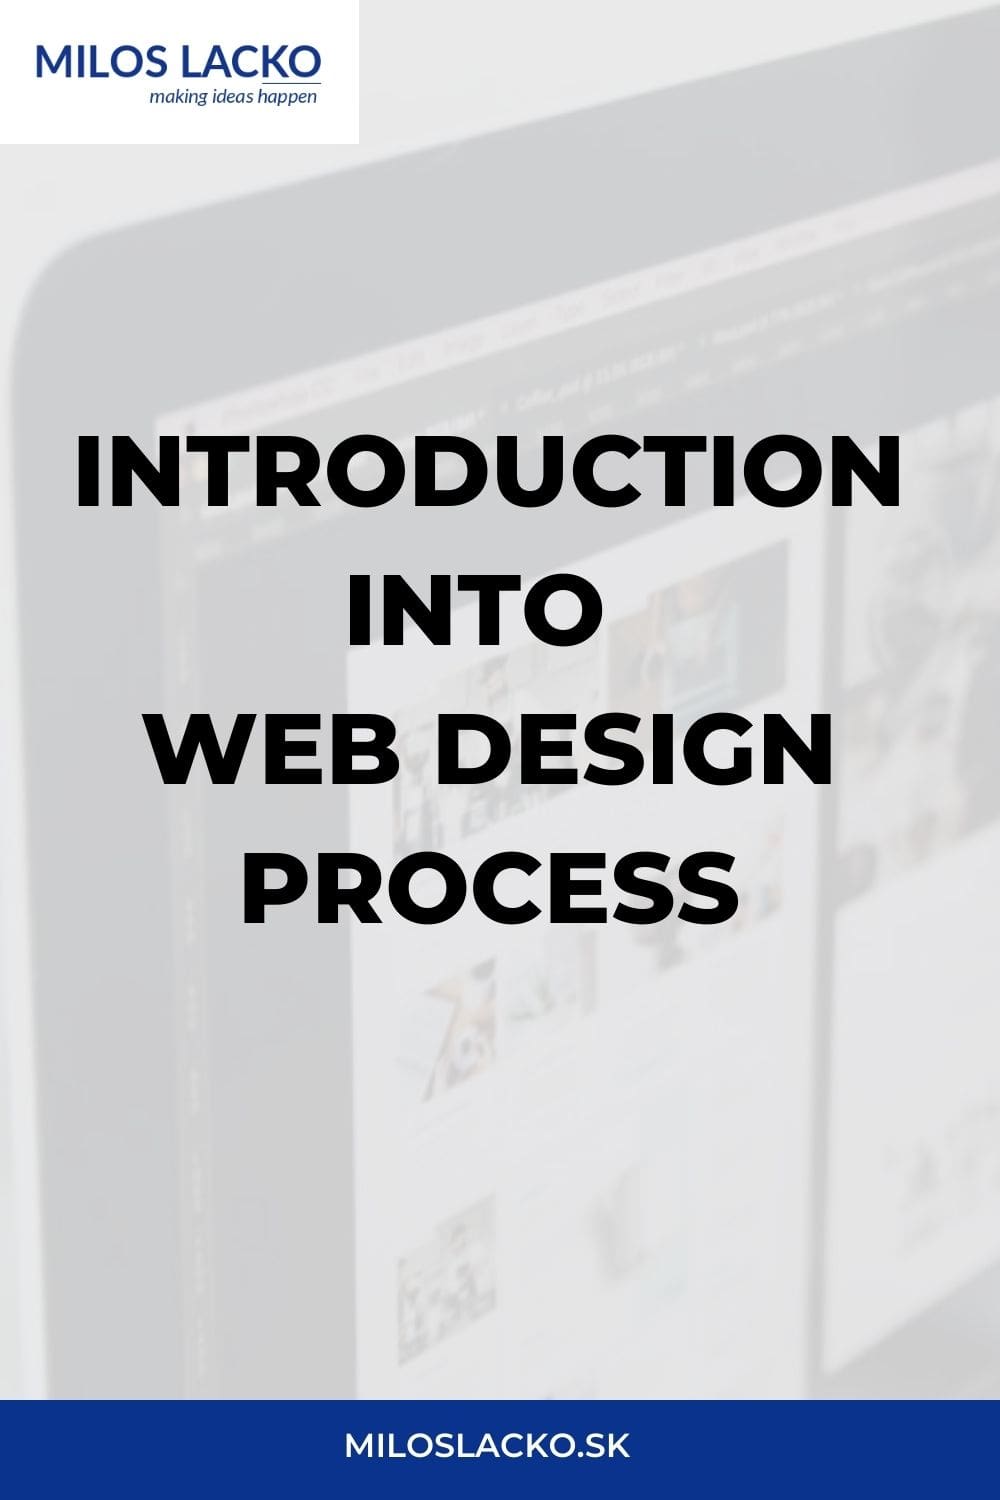 Introduction into web design process